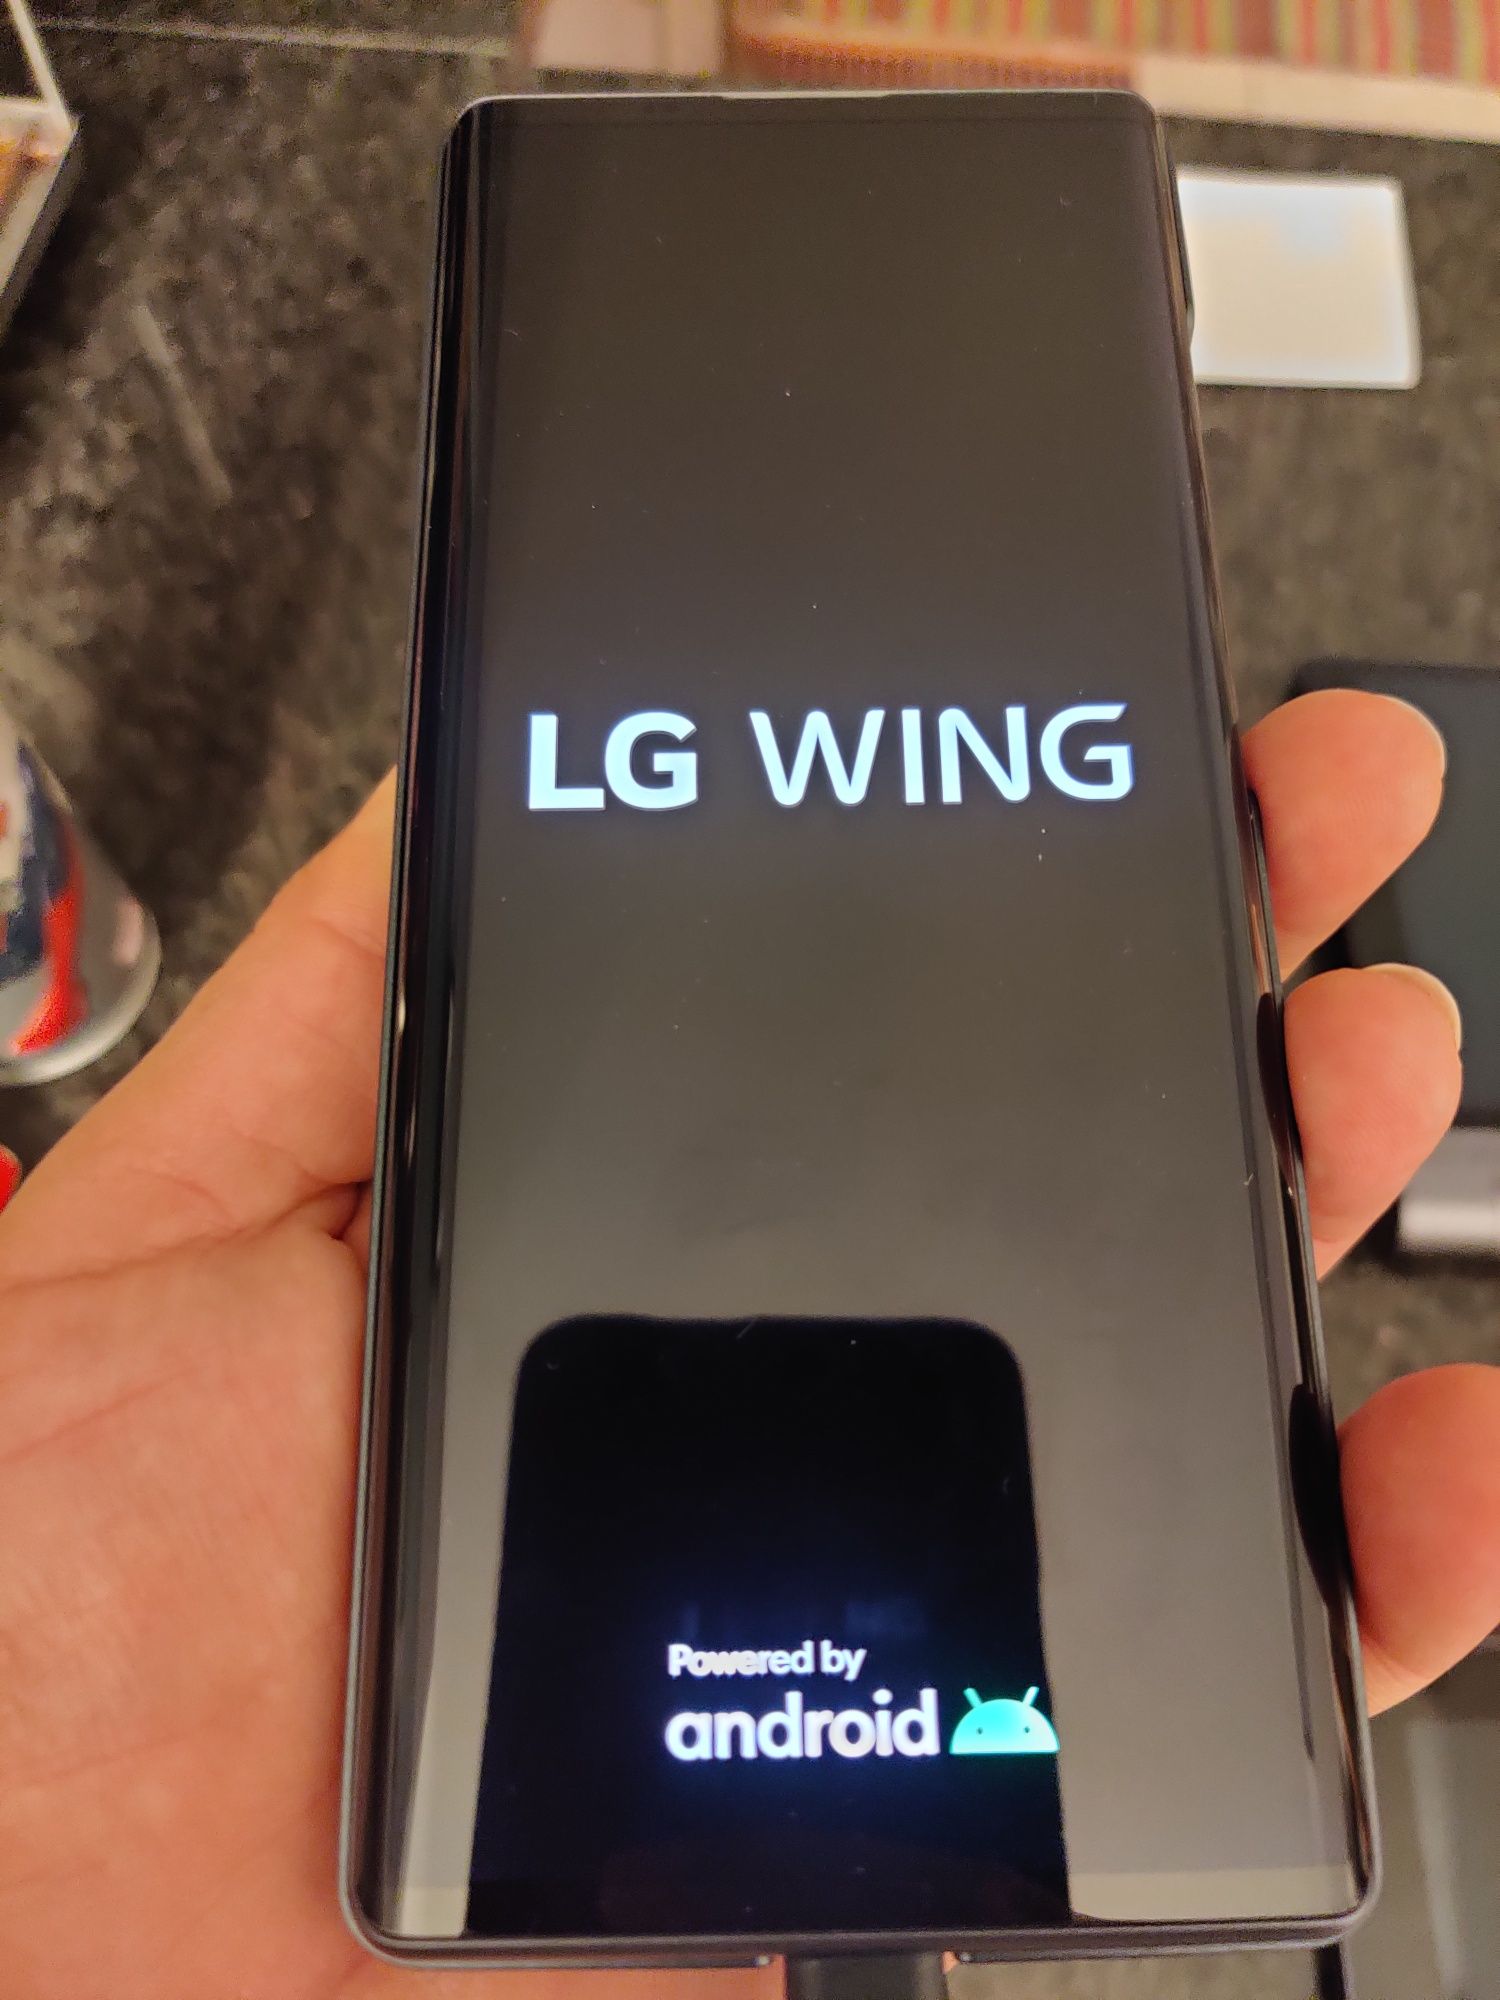 LG WING exclusivo, ecrã duplo como NOVO